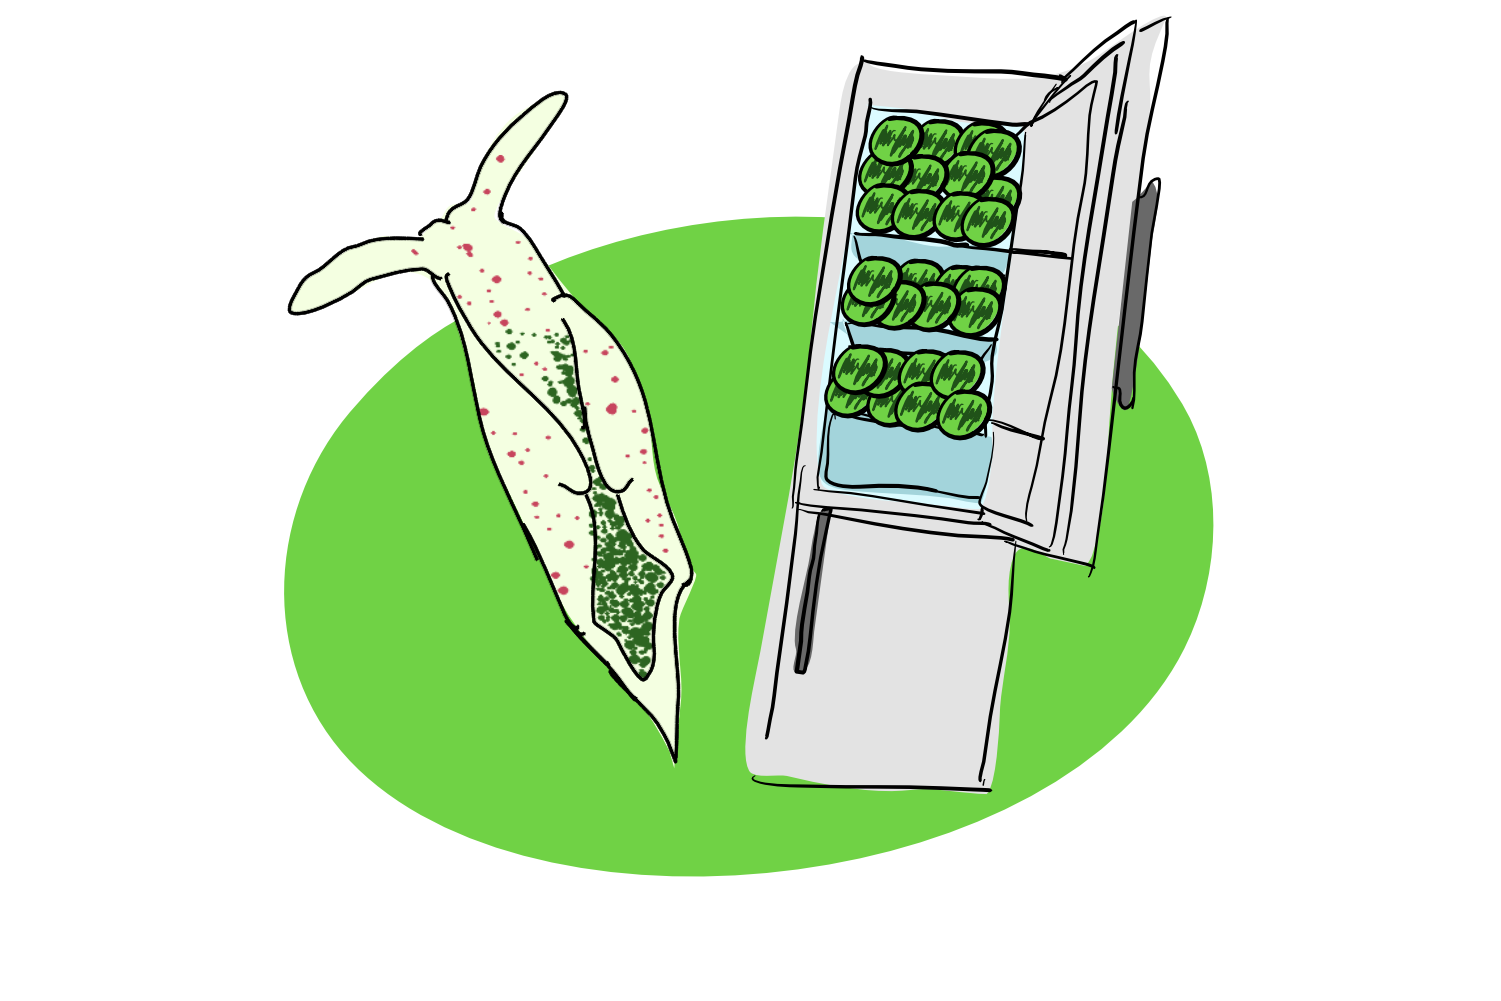 A decorative image of a sea slug and a fridge filled with chloroplasts